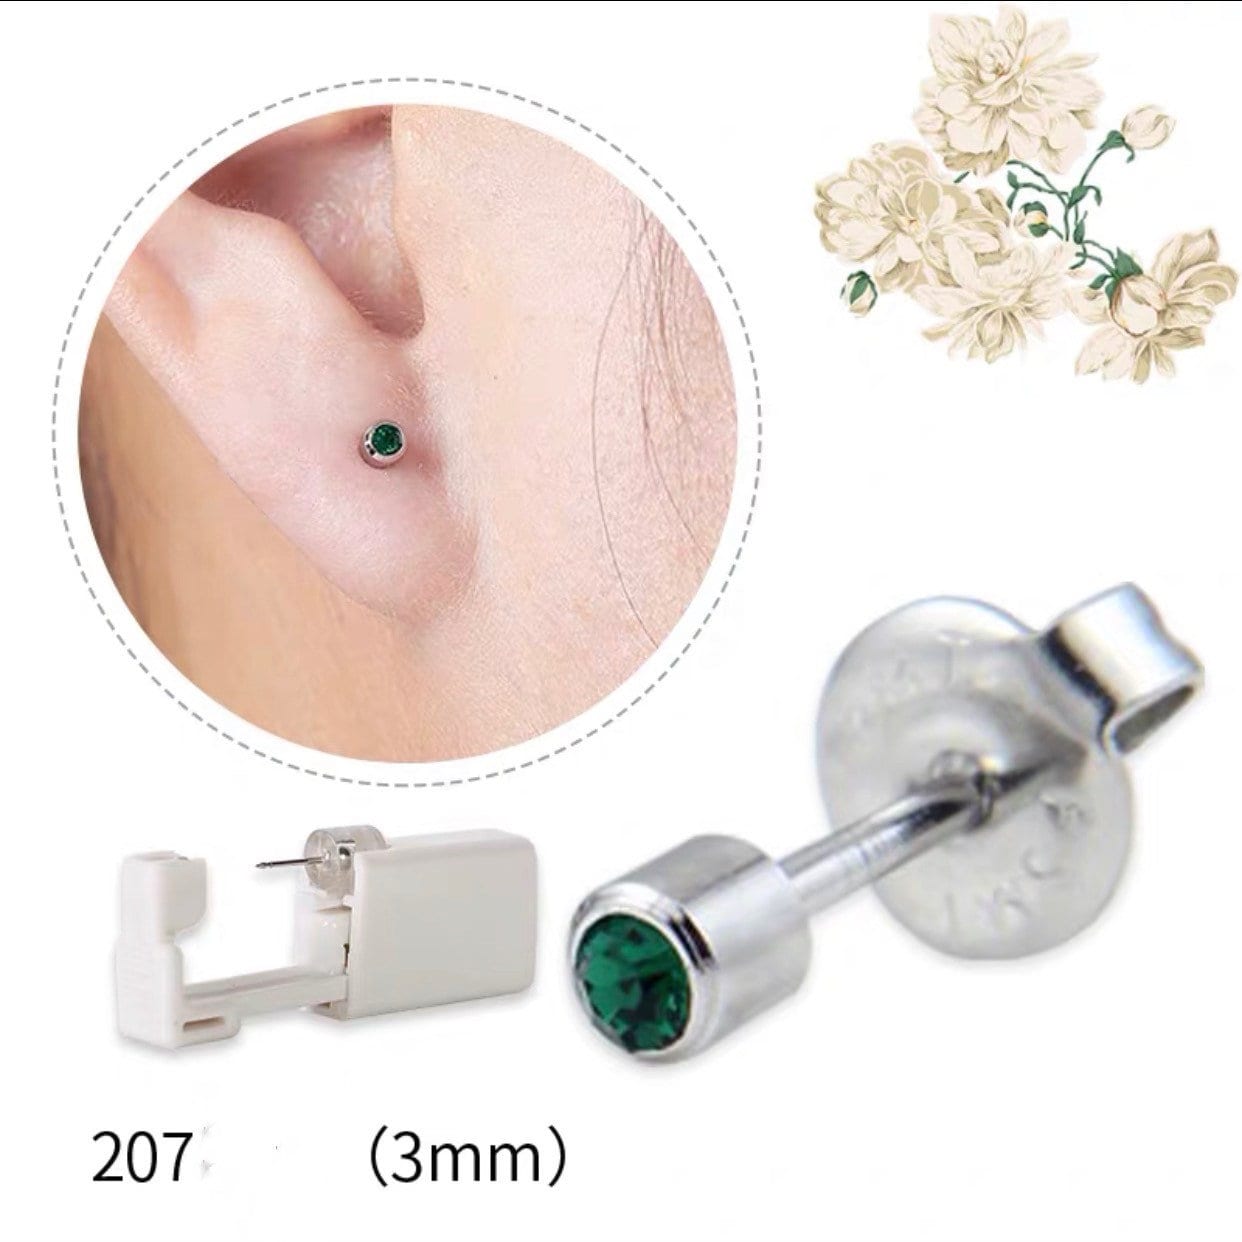 YASPIT Ear Piercing Gun Kit,Professional Ear Nose Self Piercing  Tool,Earring Piercer with Hypoallergenicear Piercing Needle Kit for Salon  Home Use